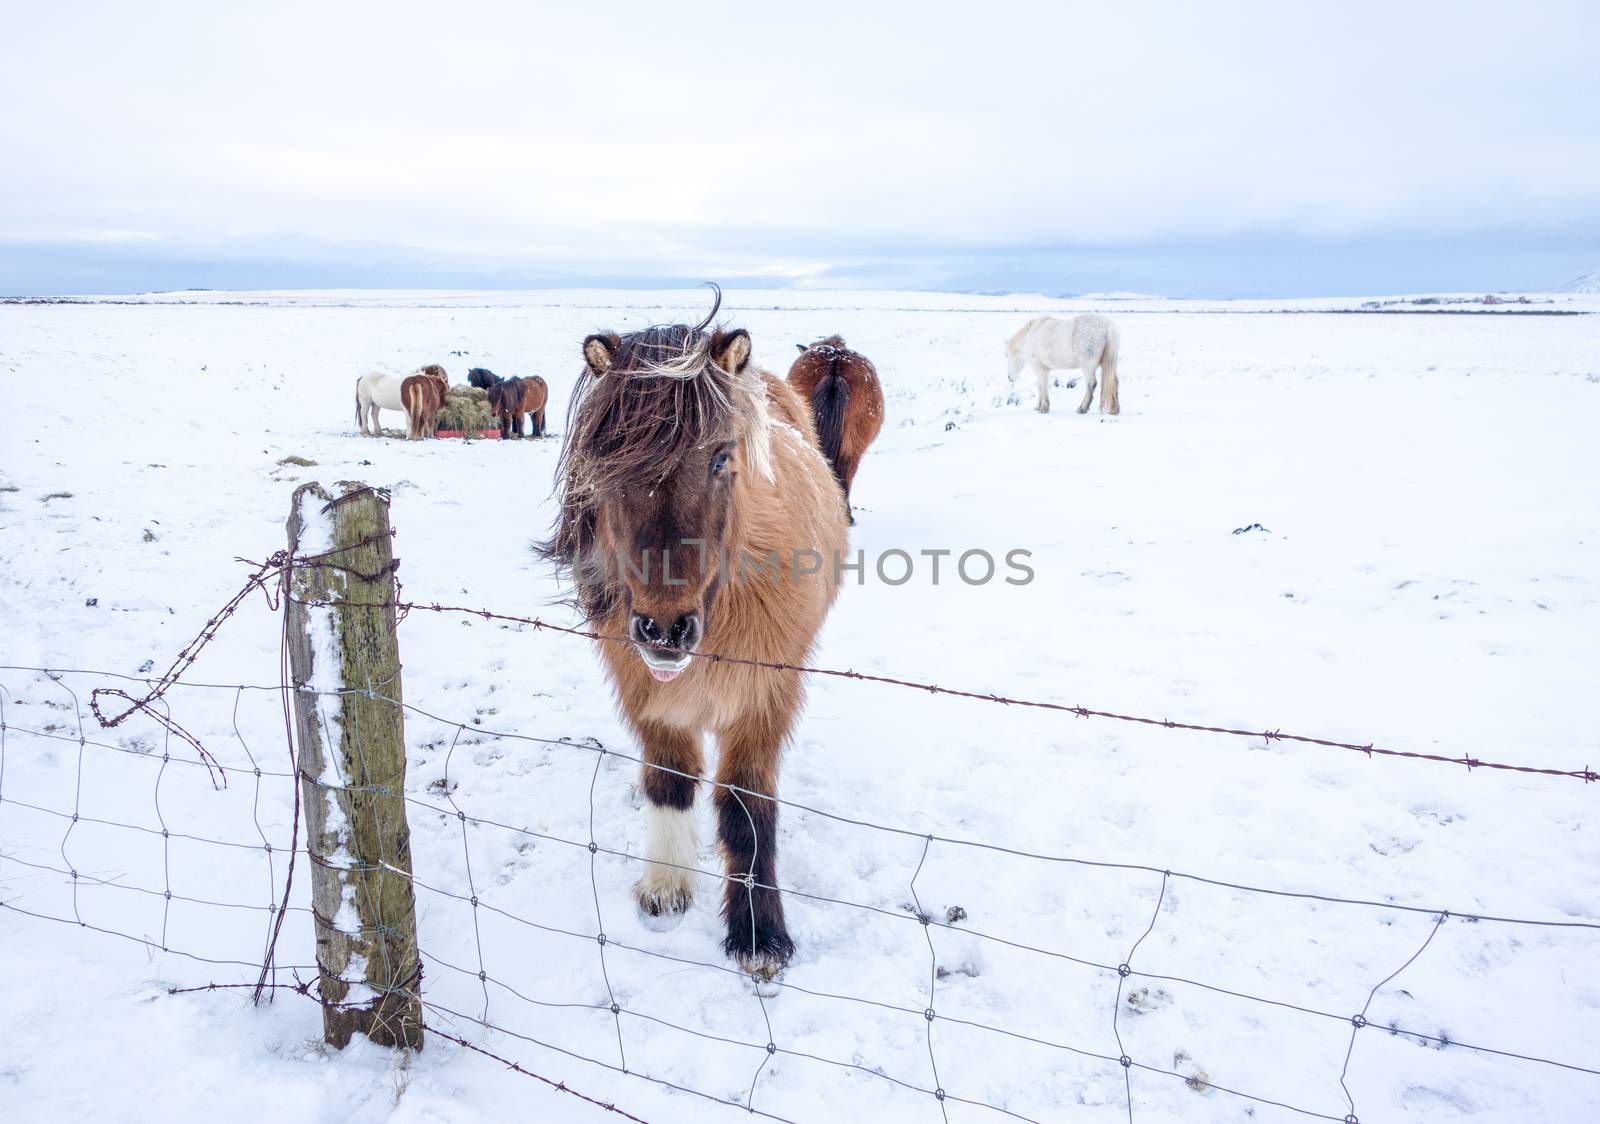 Icelandic horse by thomas_males